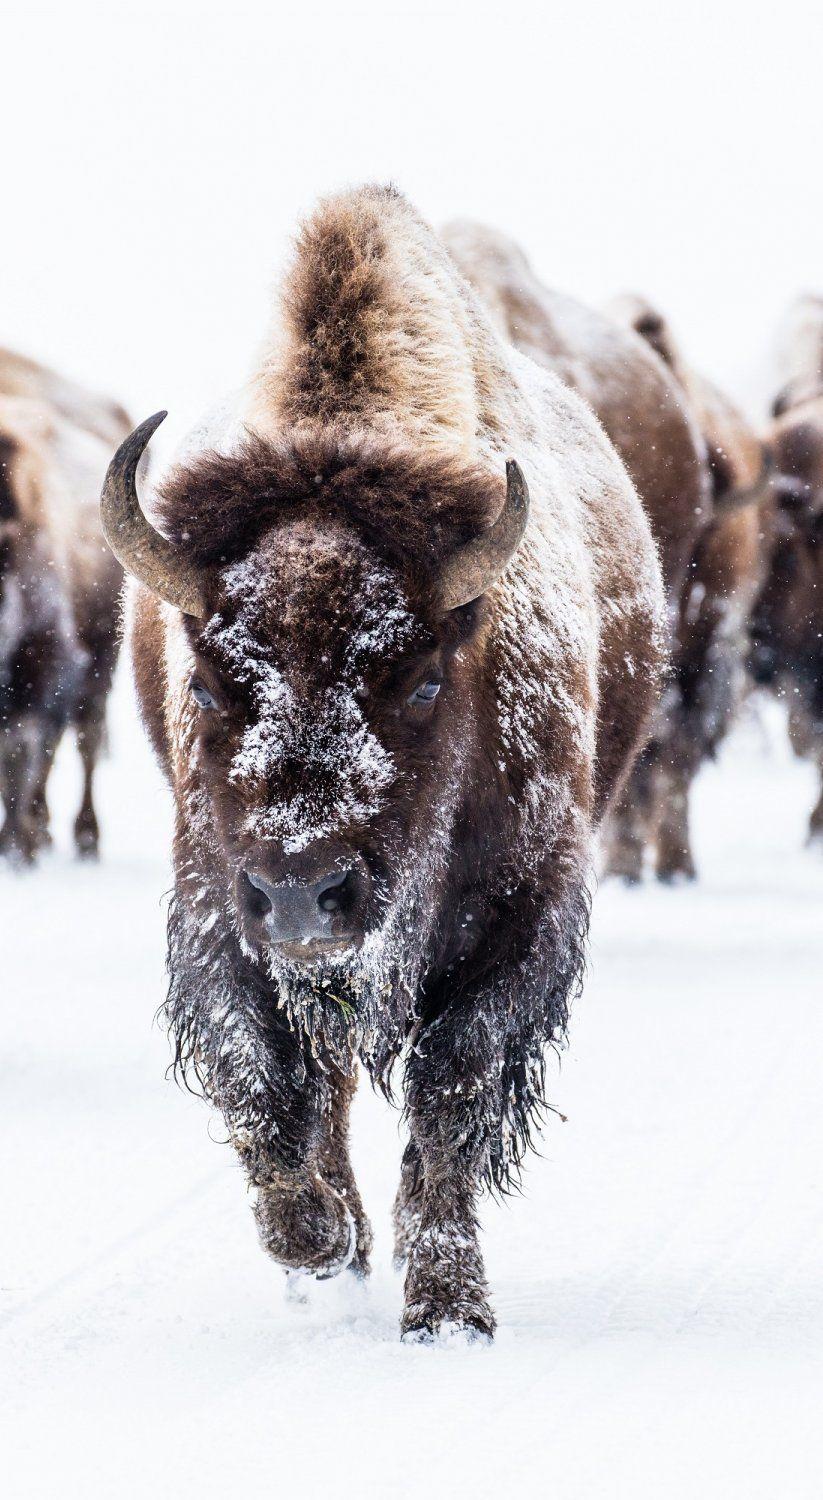 Bison Buffalo Group Herd Snow Walking Landscape Outdoors